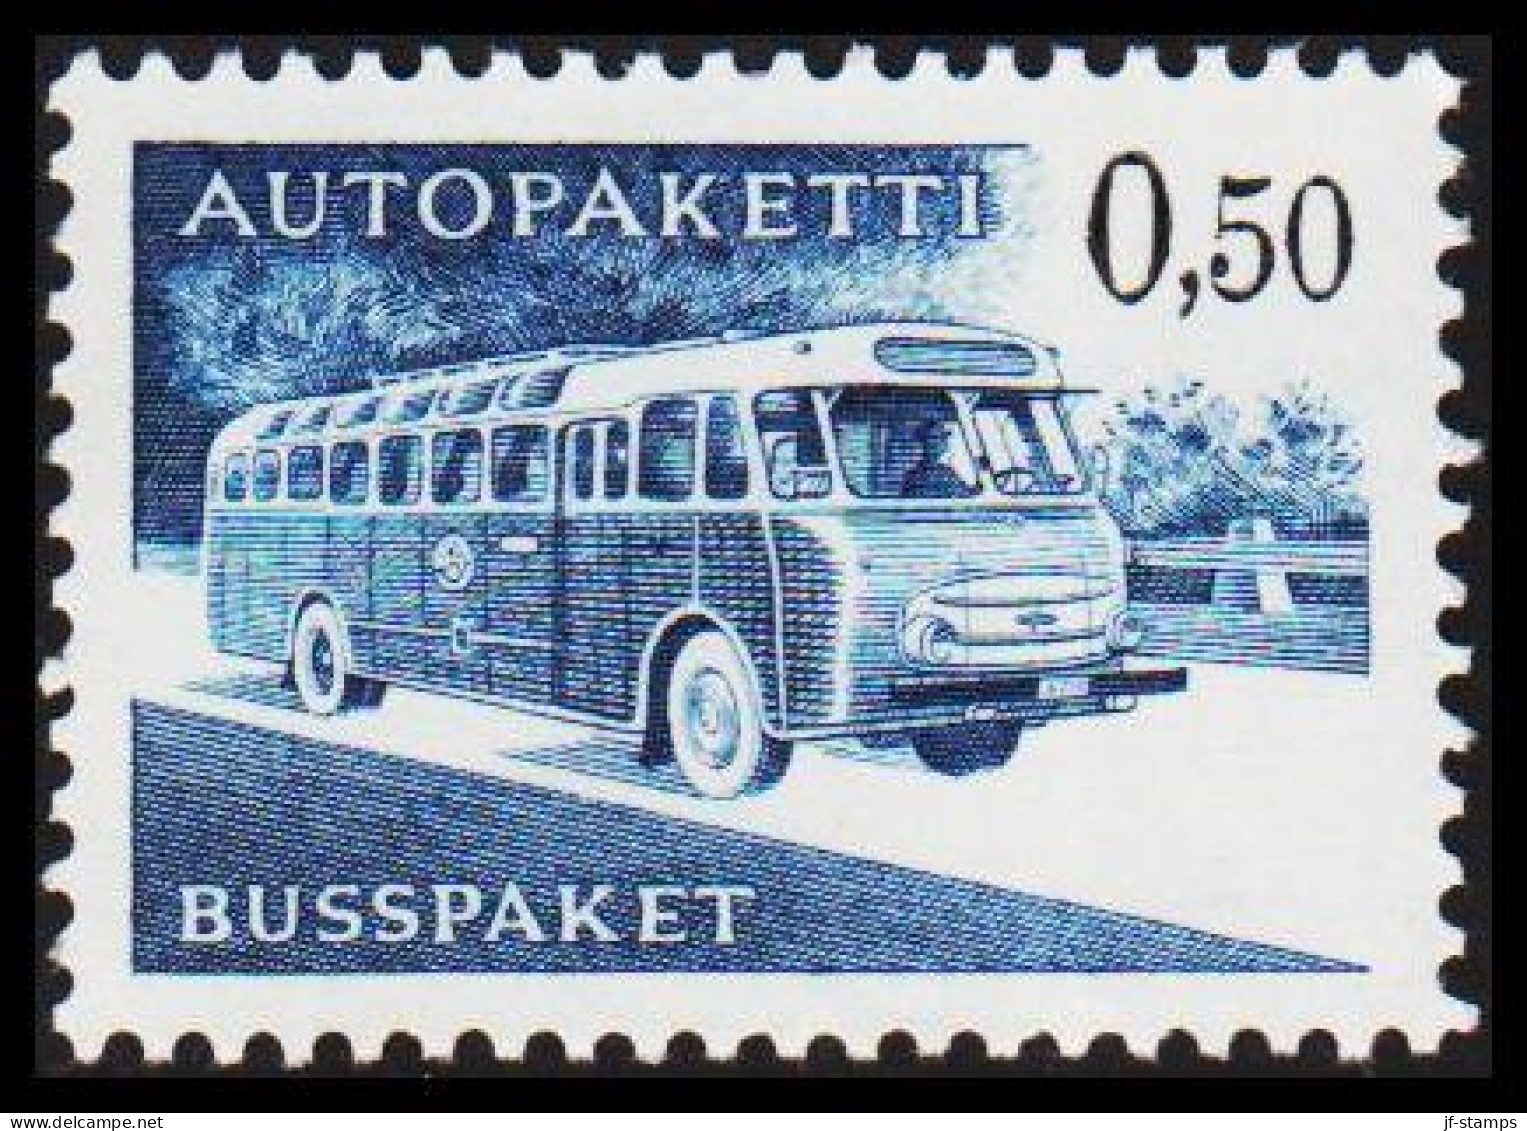 1963-1980. FINLAND. Mail Bus. 0,50 Mk. AUTOPAKETTI - BUSSPAKET Never Hinged. Normal Paper.... (Michel AP 12x) - JF535630 - Postbuspakete